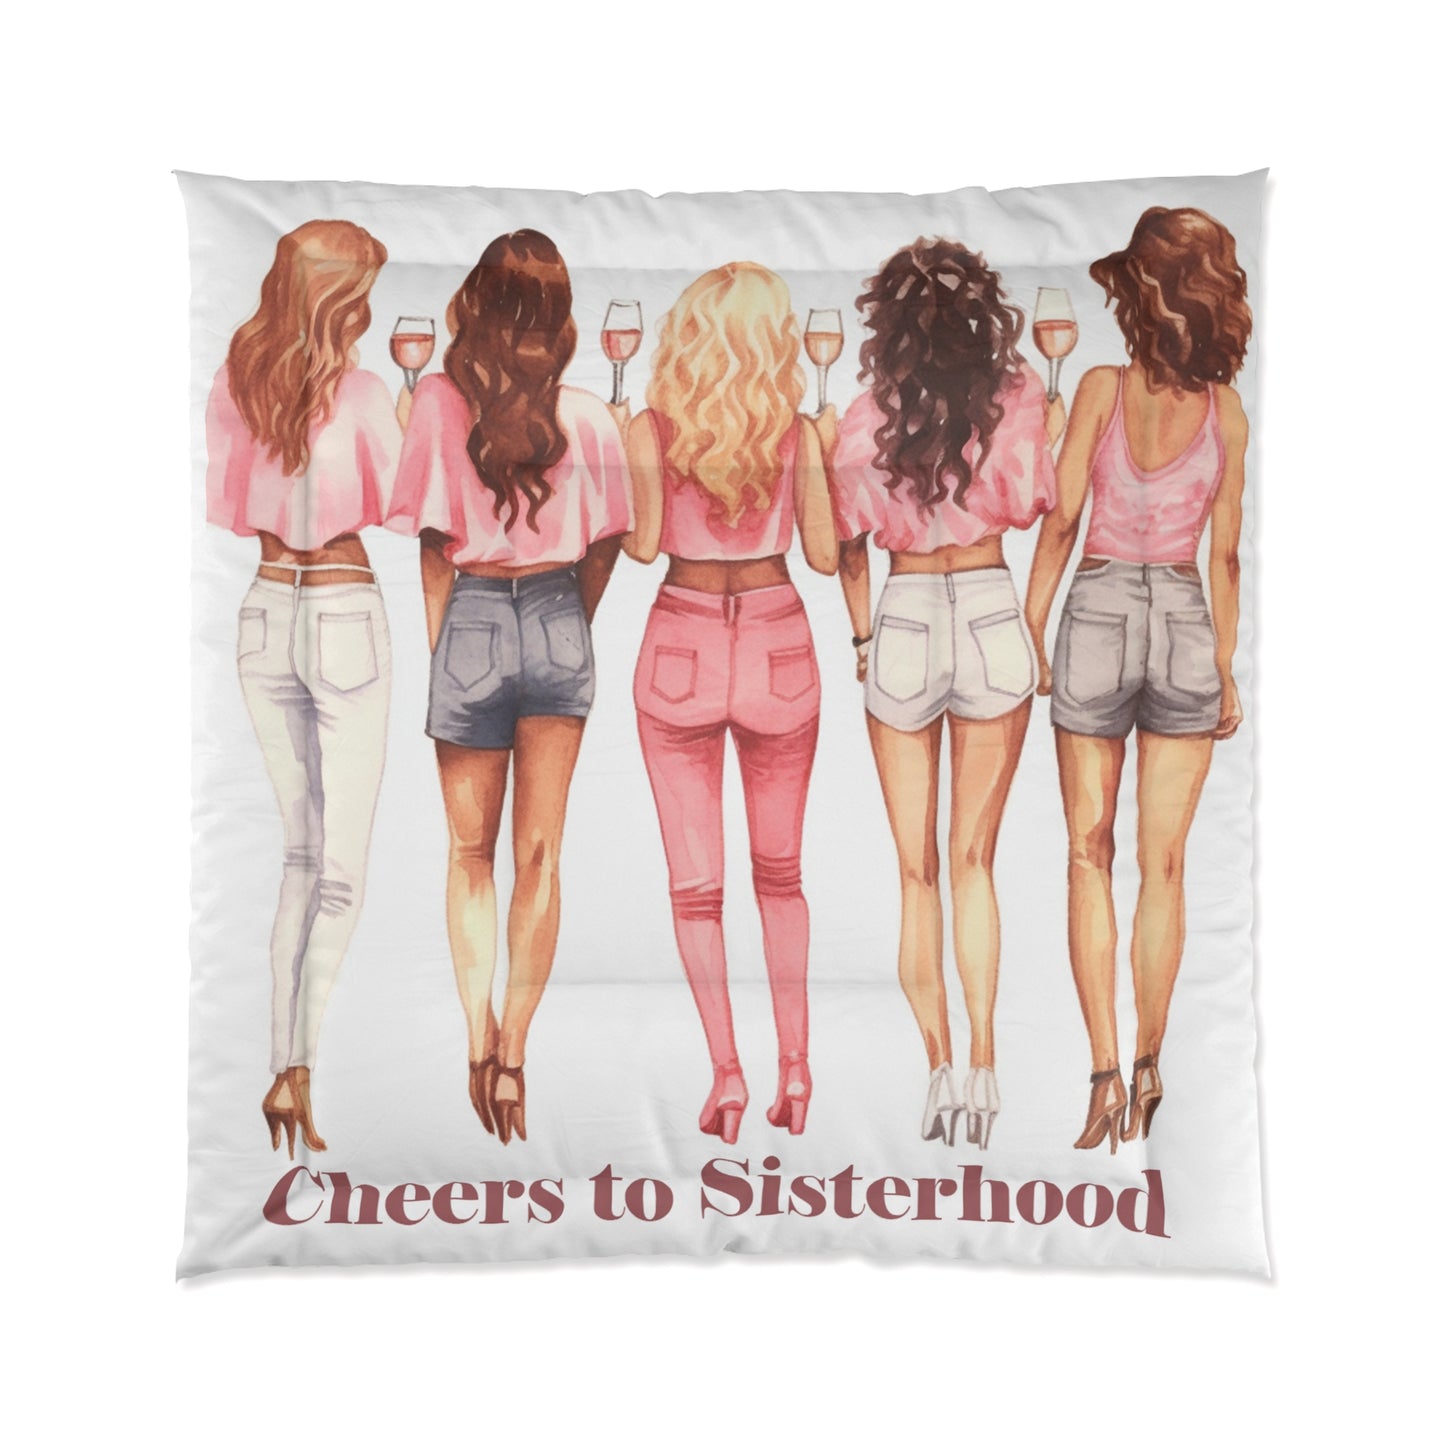 Cheers to Sisterhood - Sorority Chic Bachelorette Party Illustration - Comforter